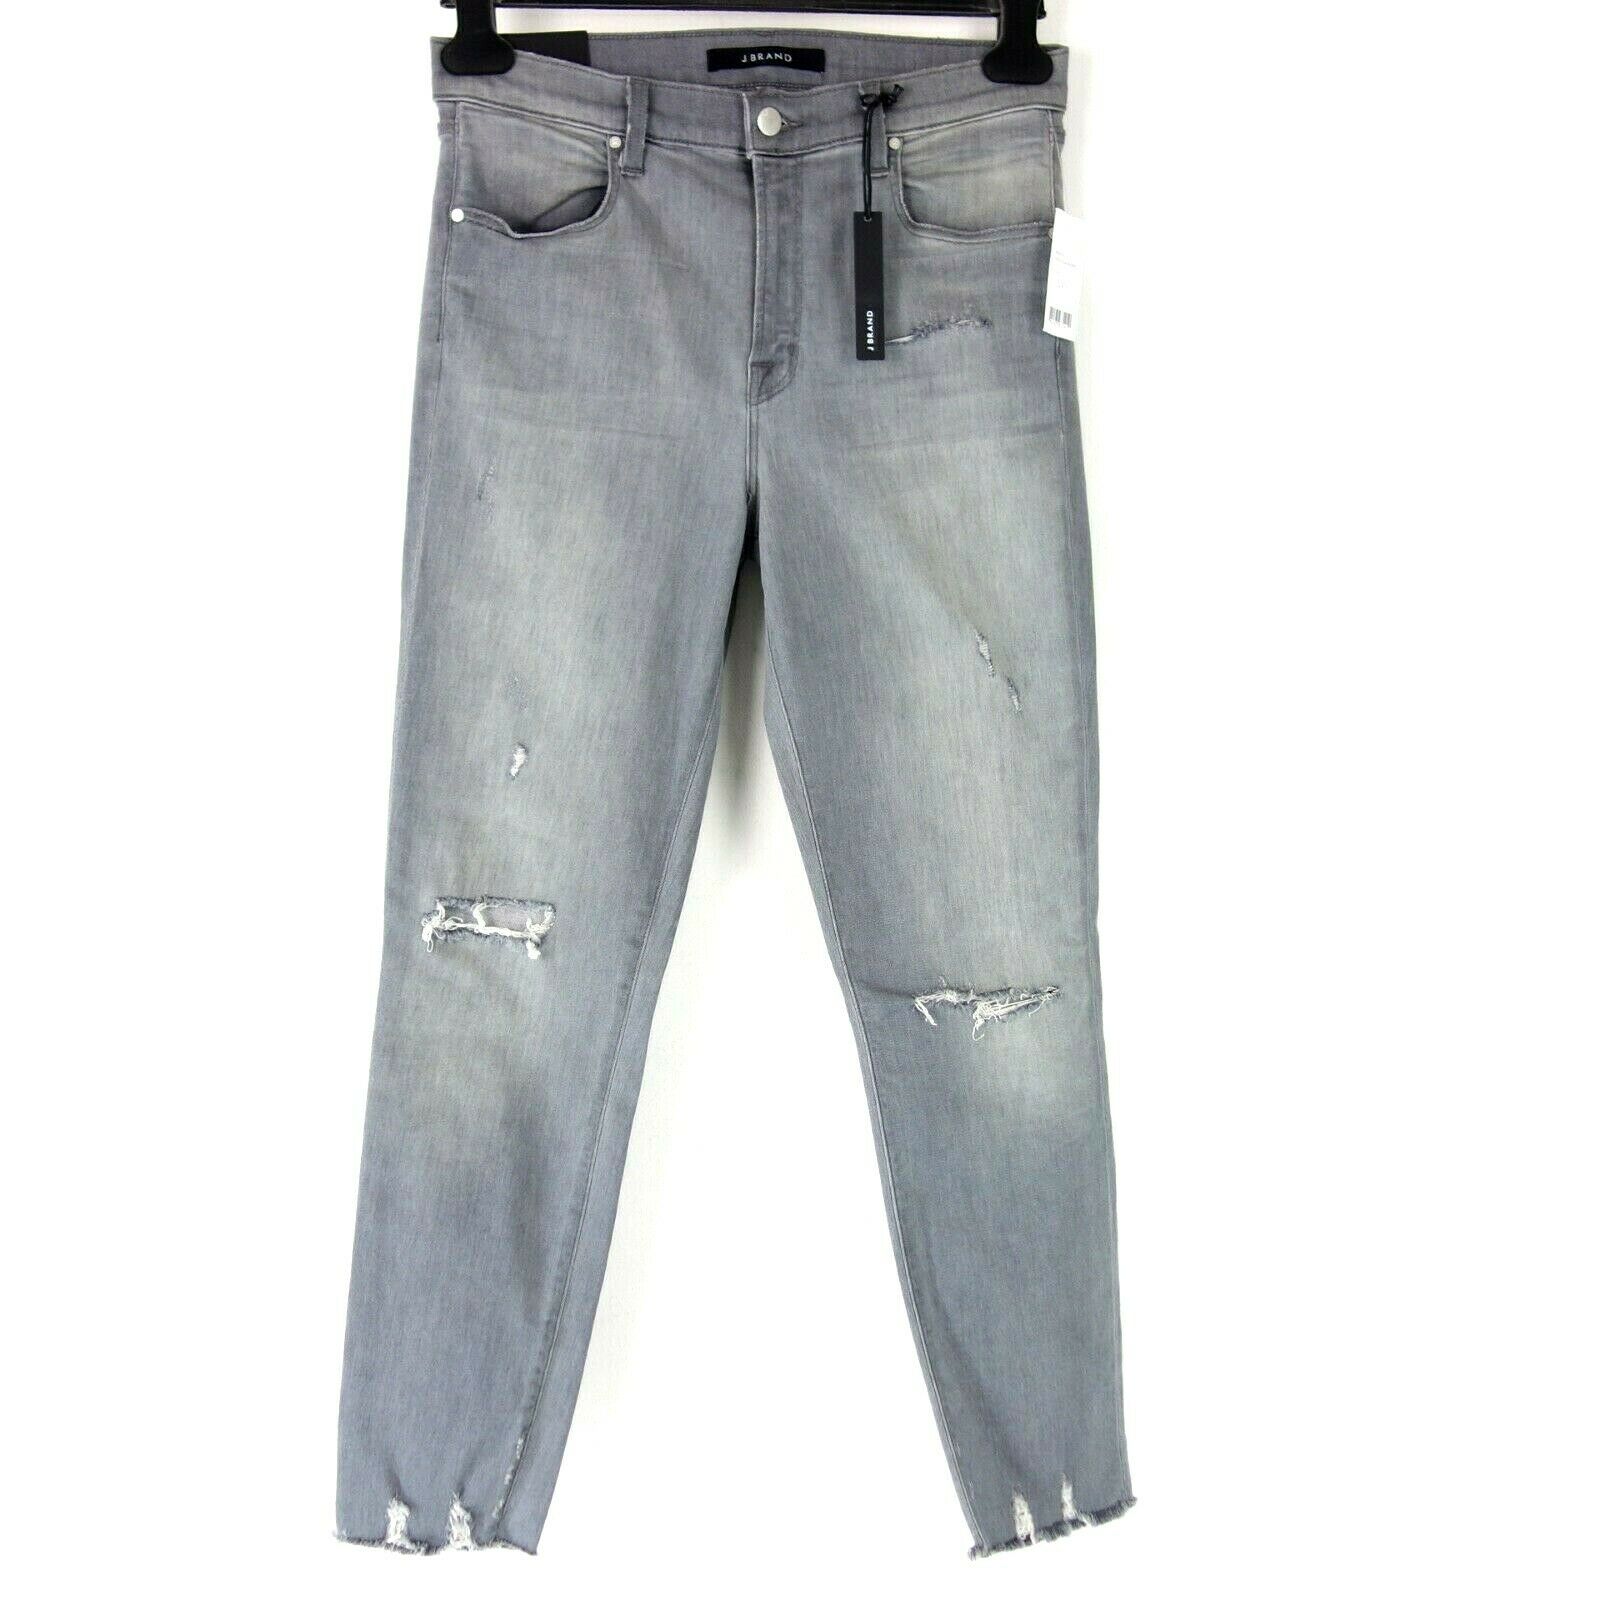 J Brand Damen Jeans Hose Modell Alana Grau High Rise Crop Größe W30 Neu